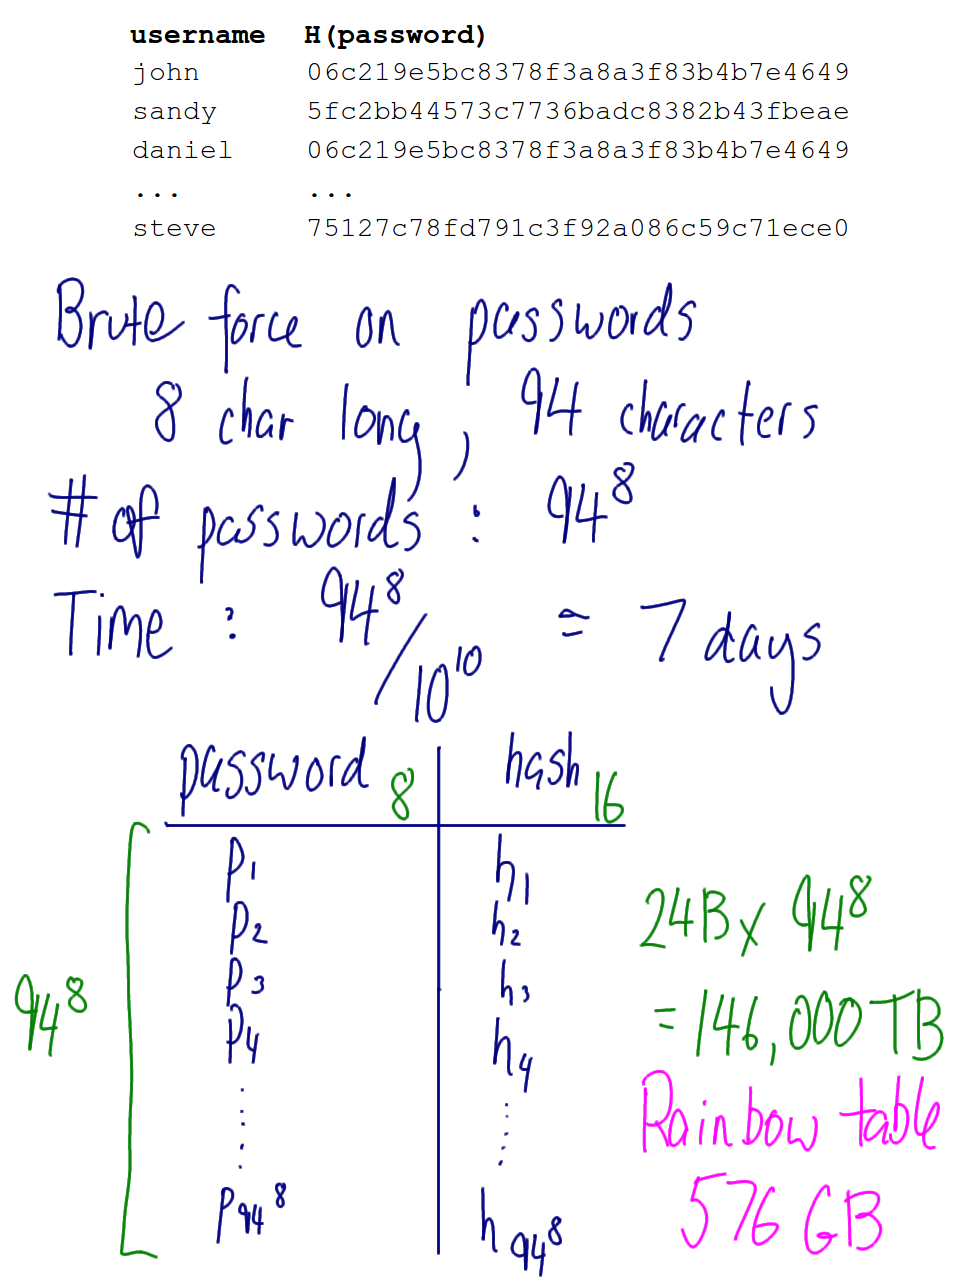 Password Storage - Using Rainbow Table